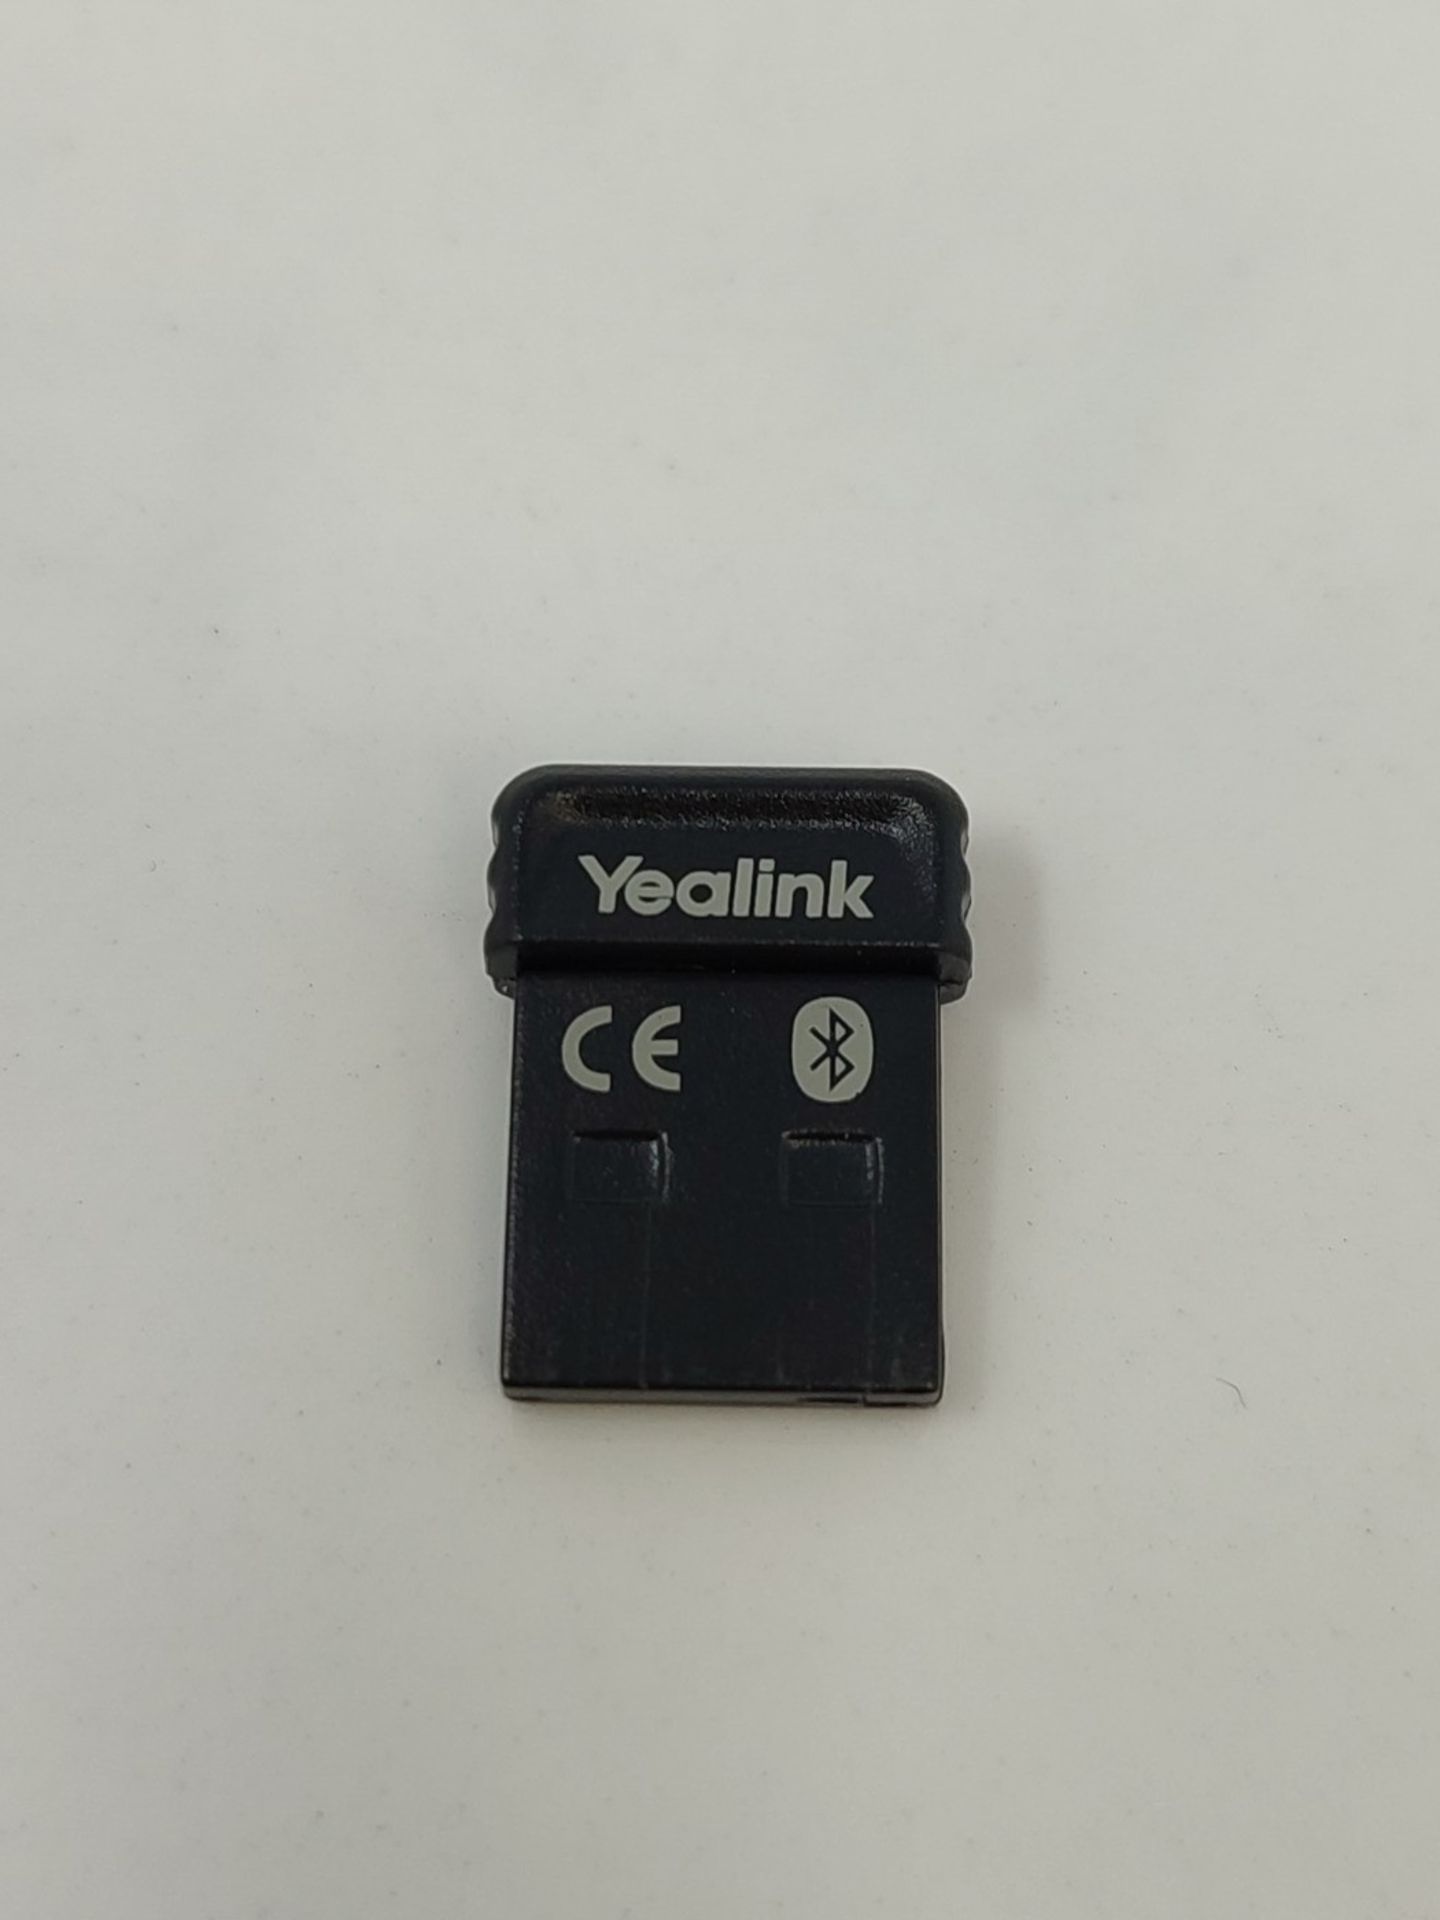 Yealink Bluetooth USB Dongle BT41 Bluetooth Adapter. - Image 3 of 3